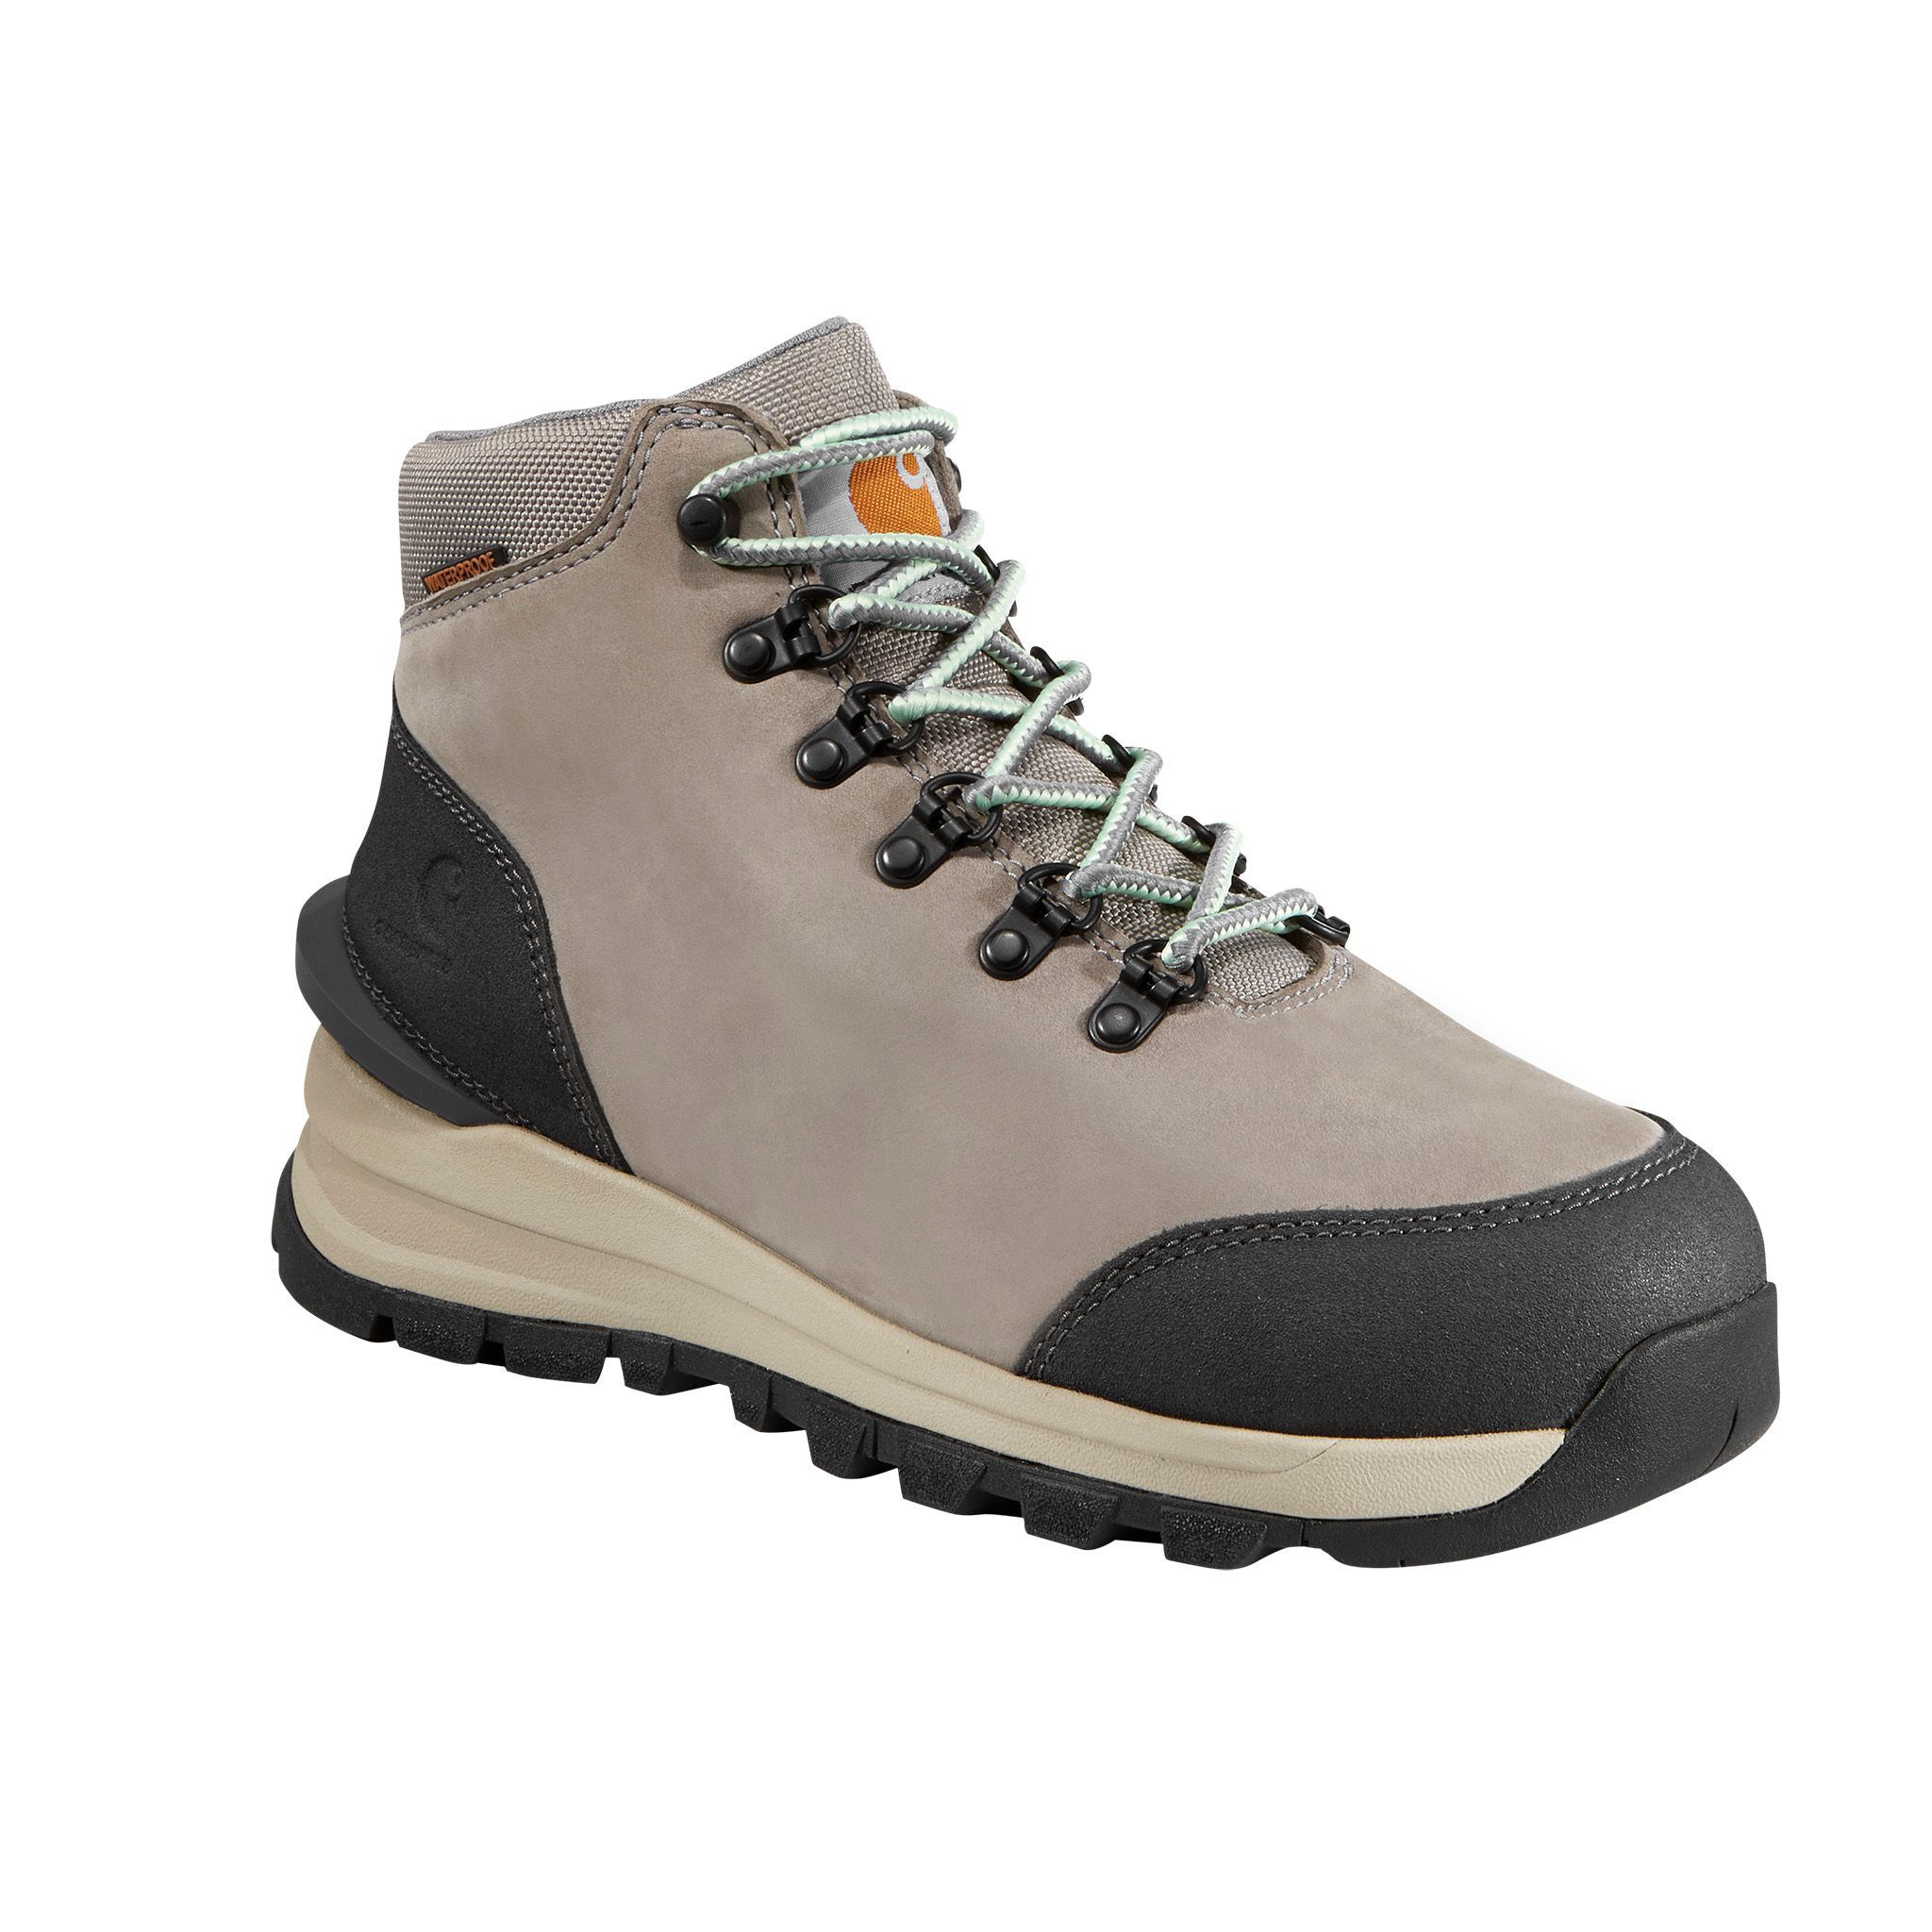 Carhartt Gilmore Waterproof Hiking Boots for Ladies - Grey Nubuck - 7.5M